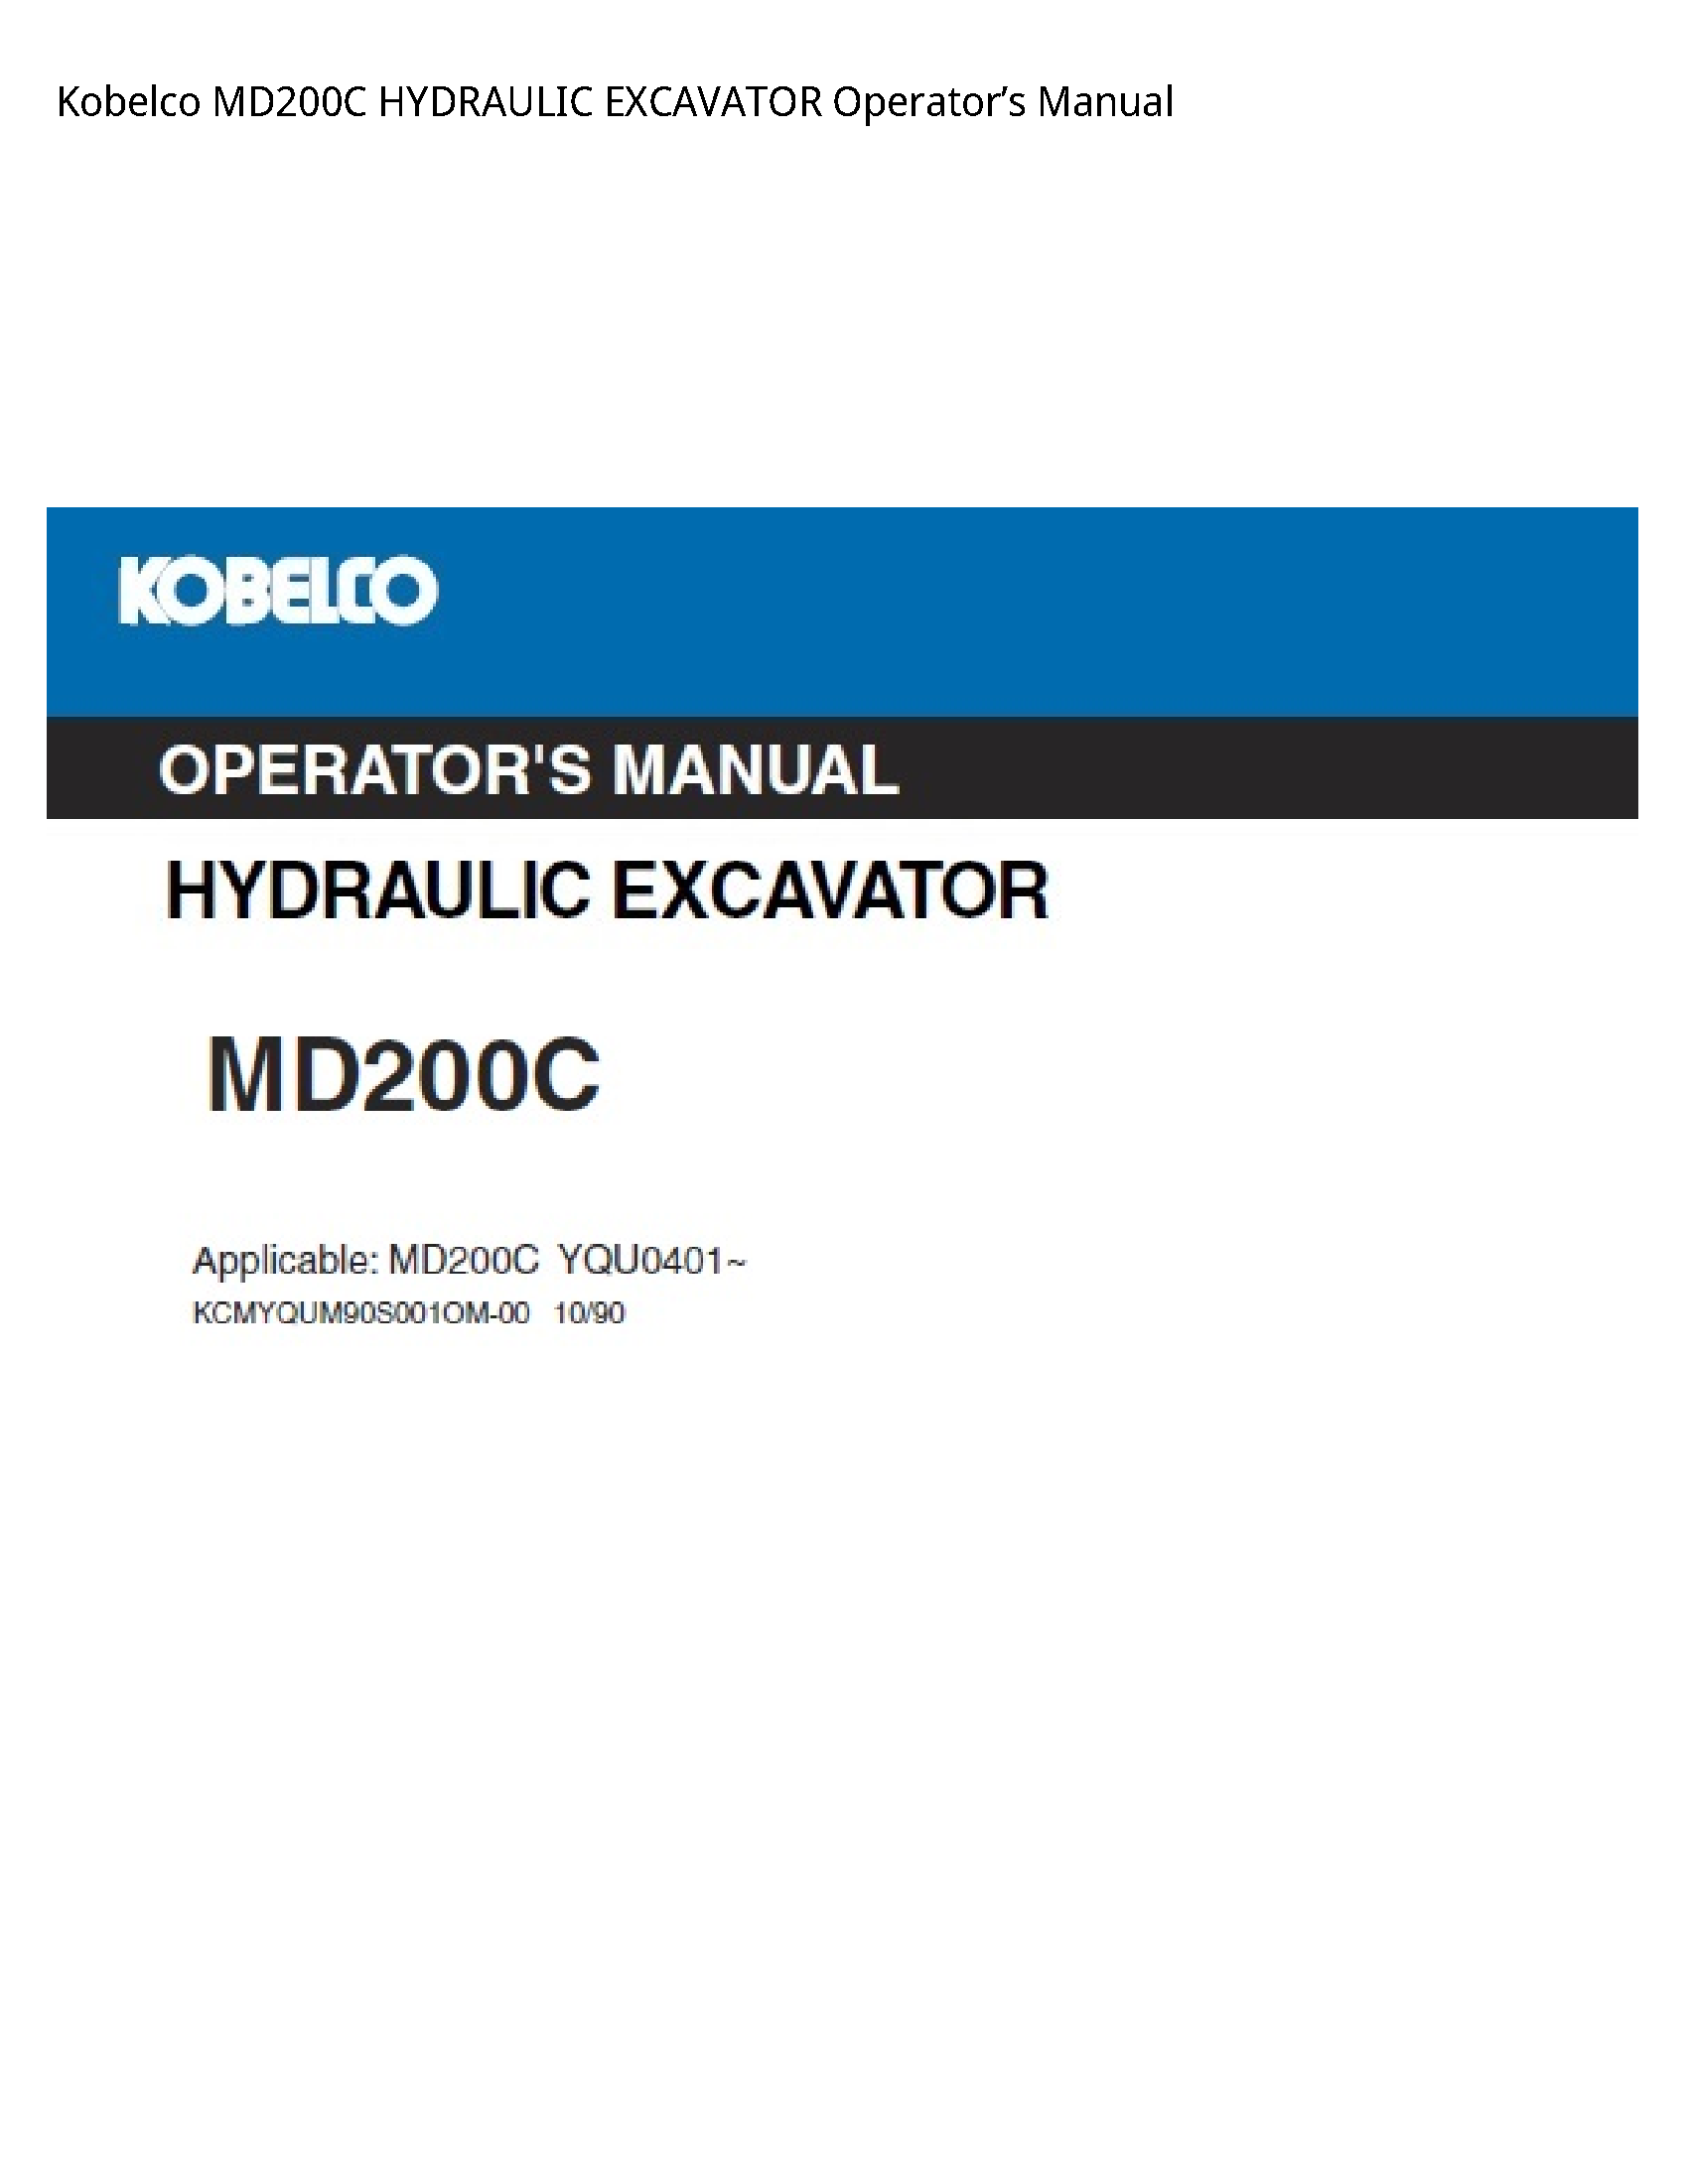 Kobelco MD200C HYDRAULIC EXCAVATOR Operator’s manual